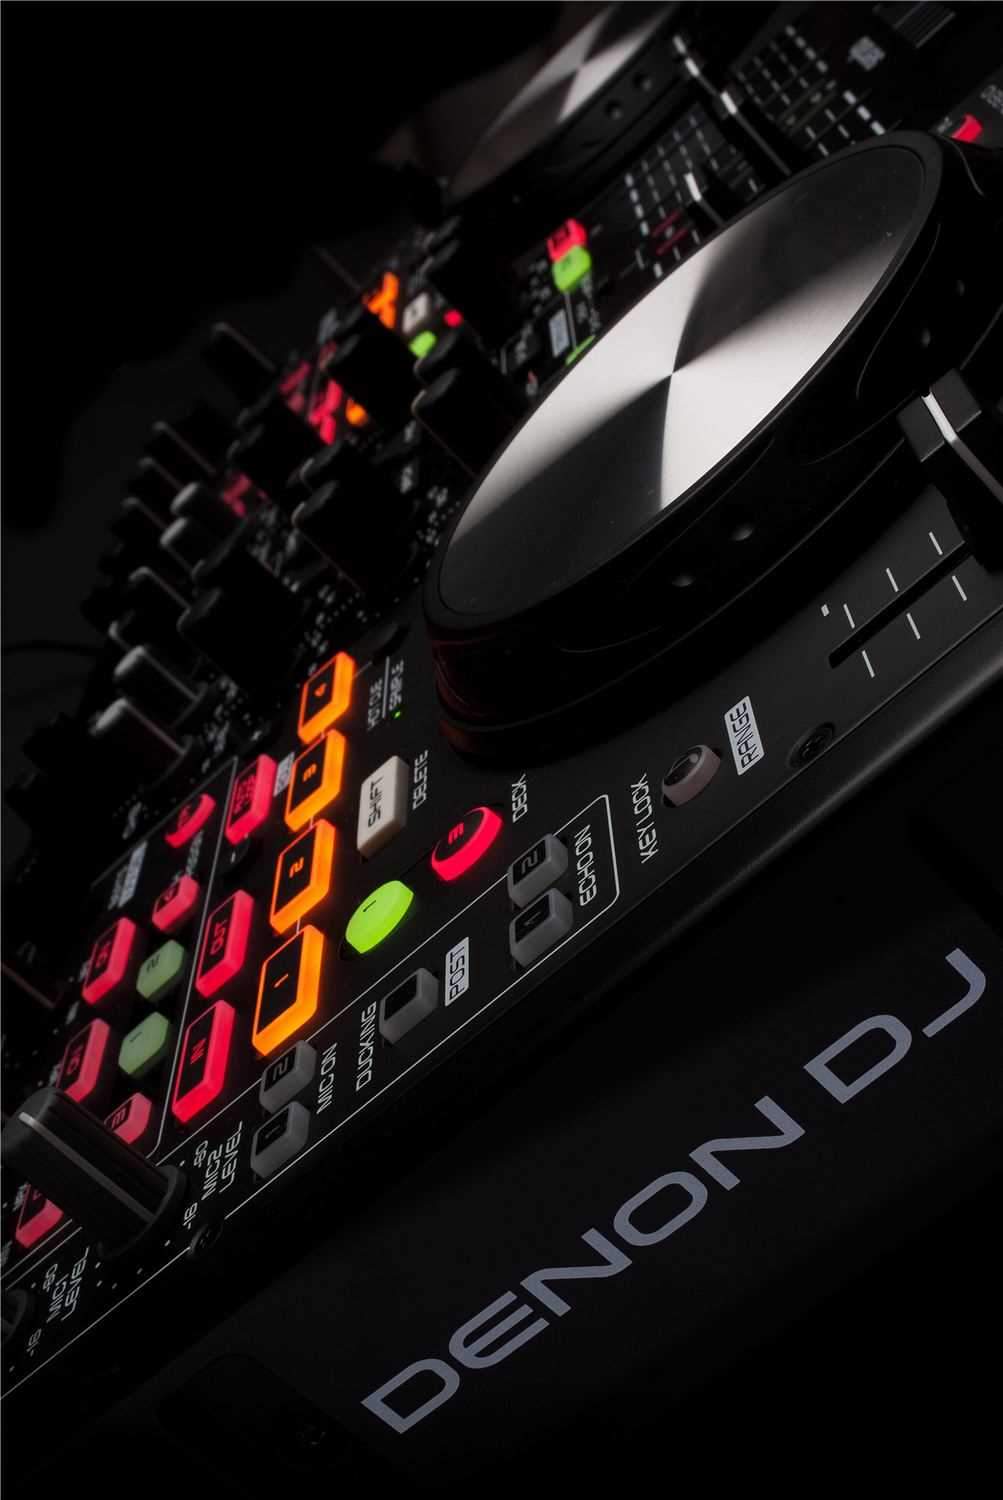 Denon DJ MC6000MK2 4-Deck Serato DJ Controller - PSSL ProSound and Stage Lighting